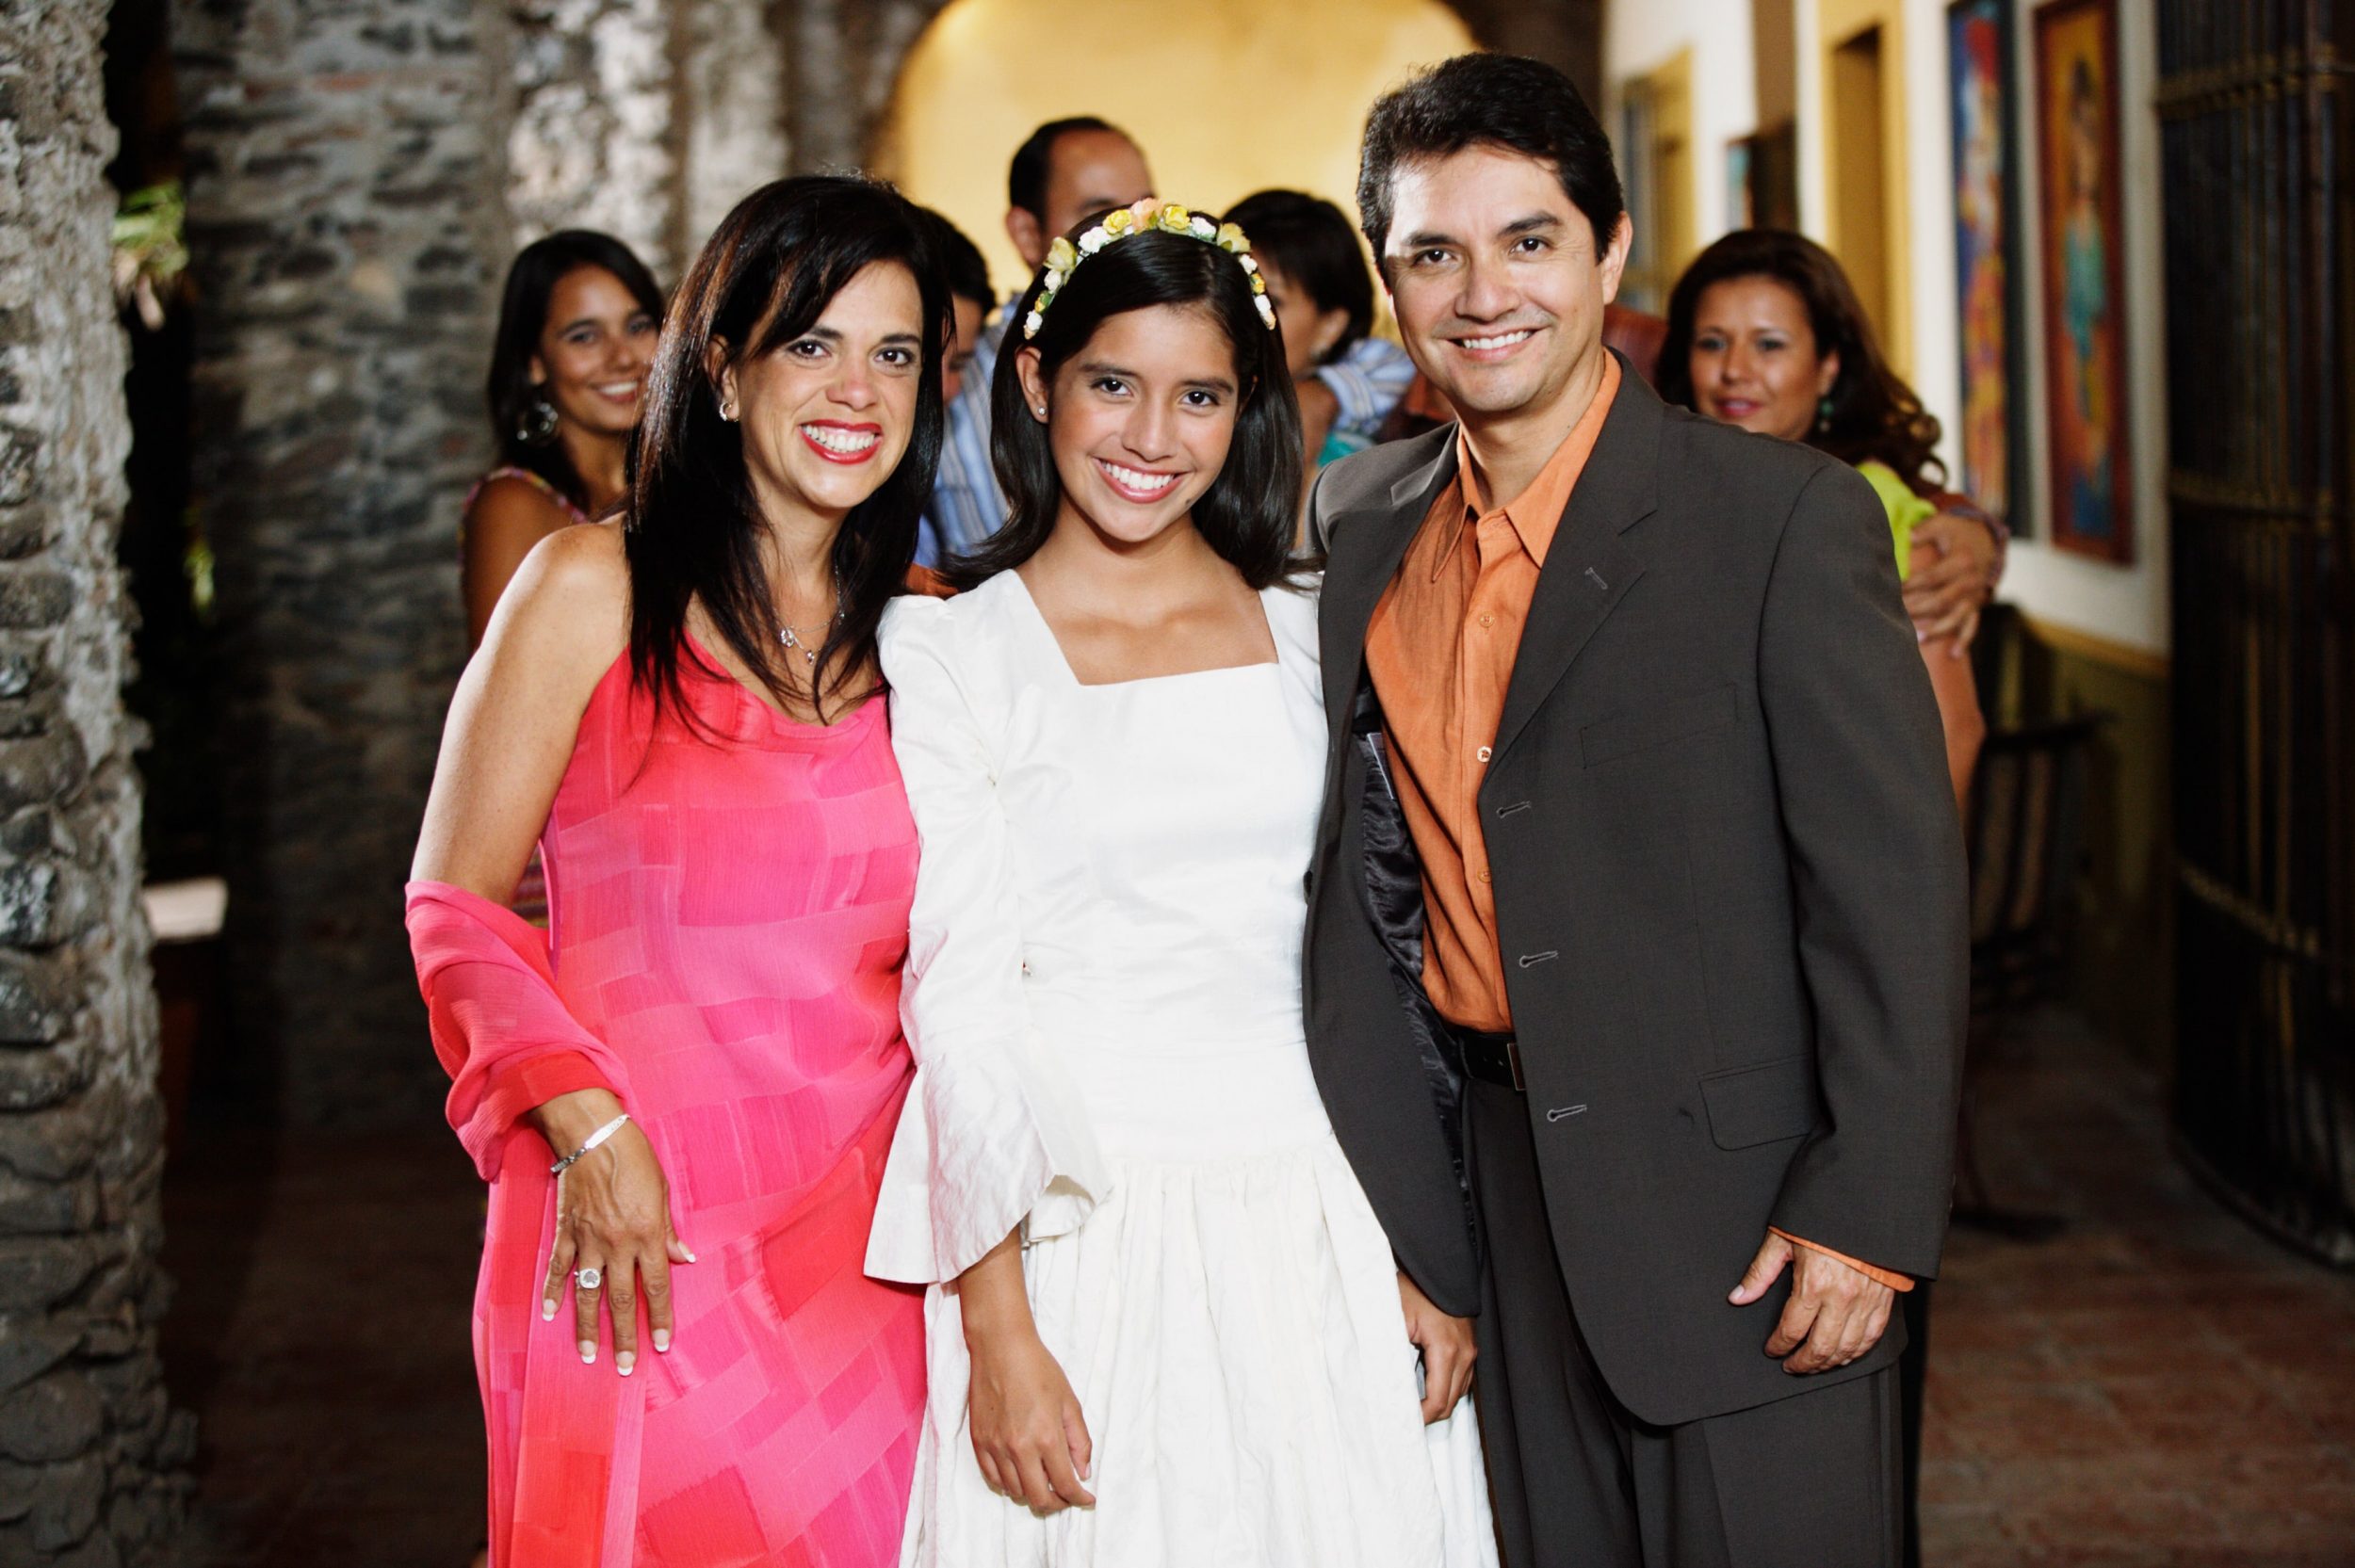 Hispanic Family at Quinceanera